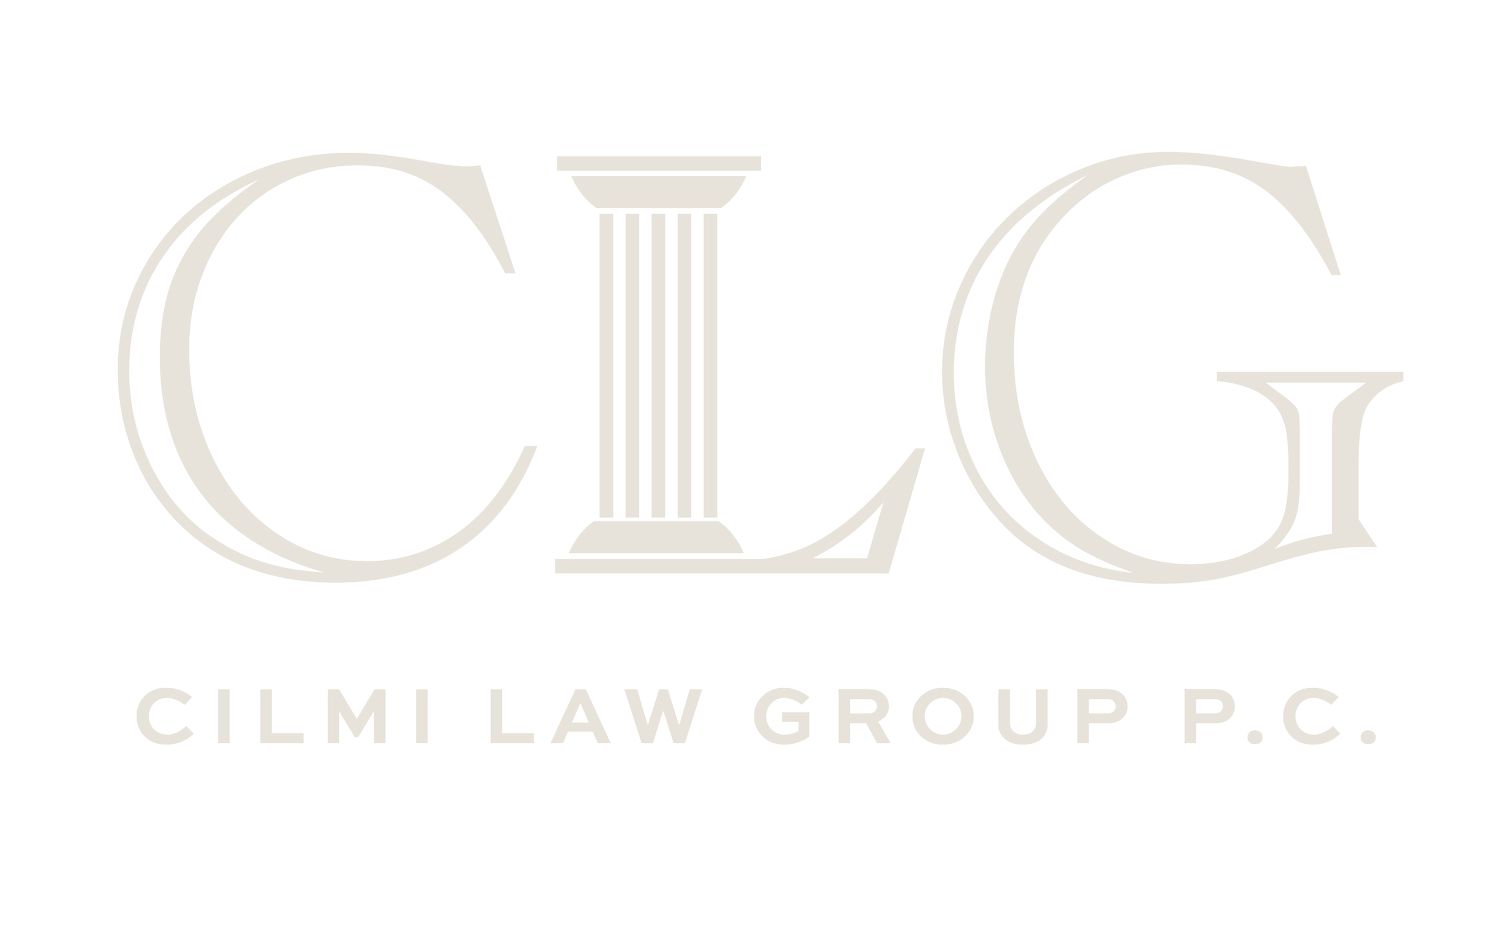 Cilmi Law Group P.C.